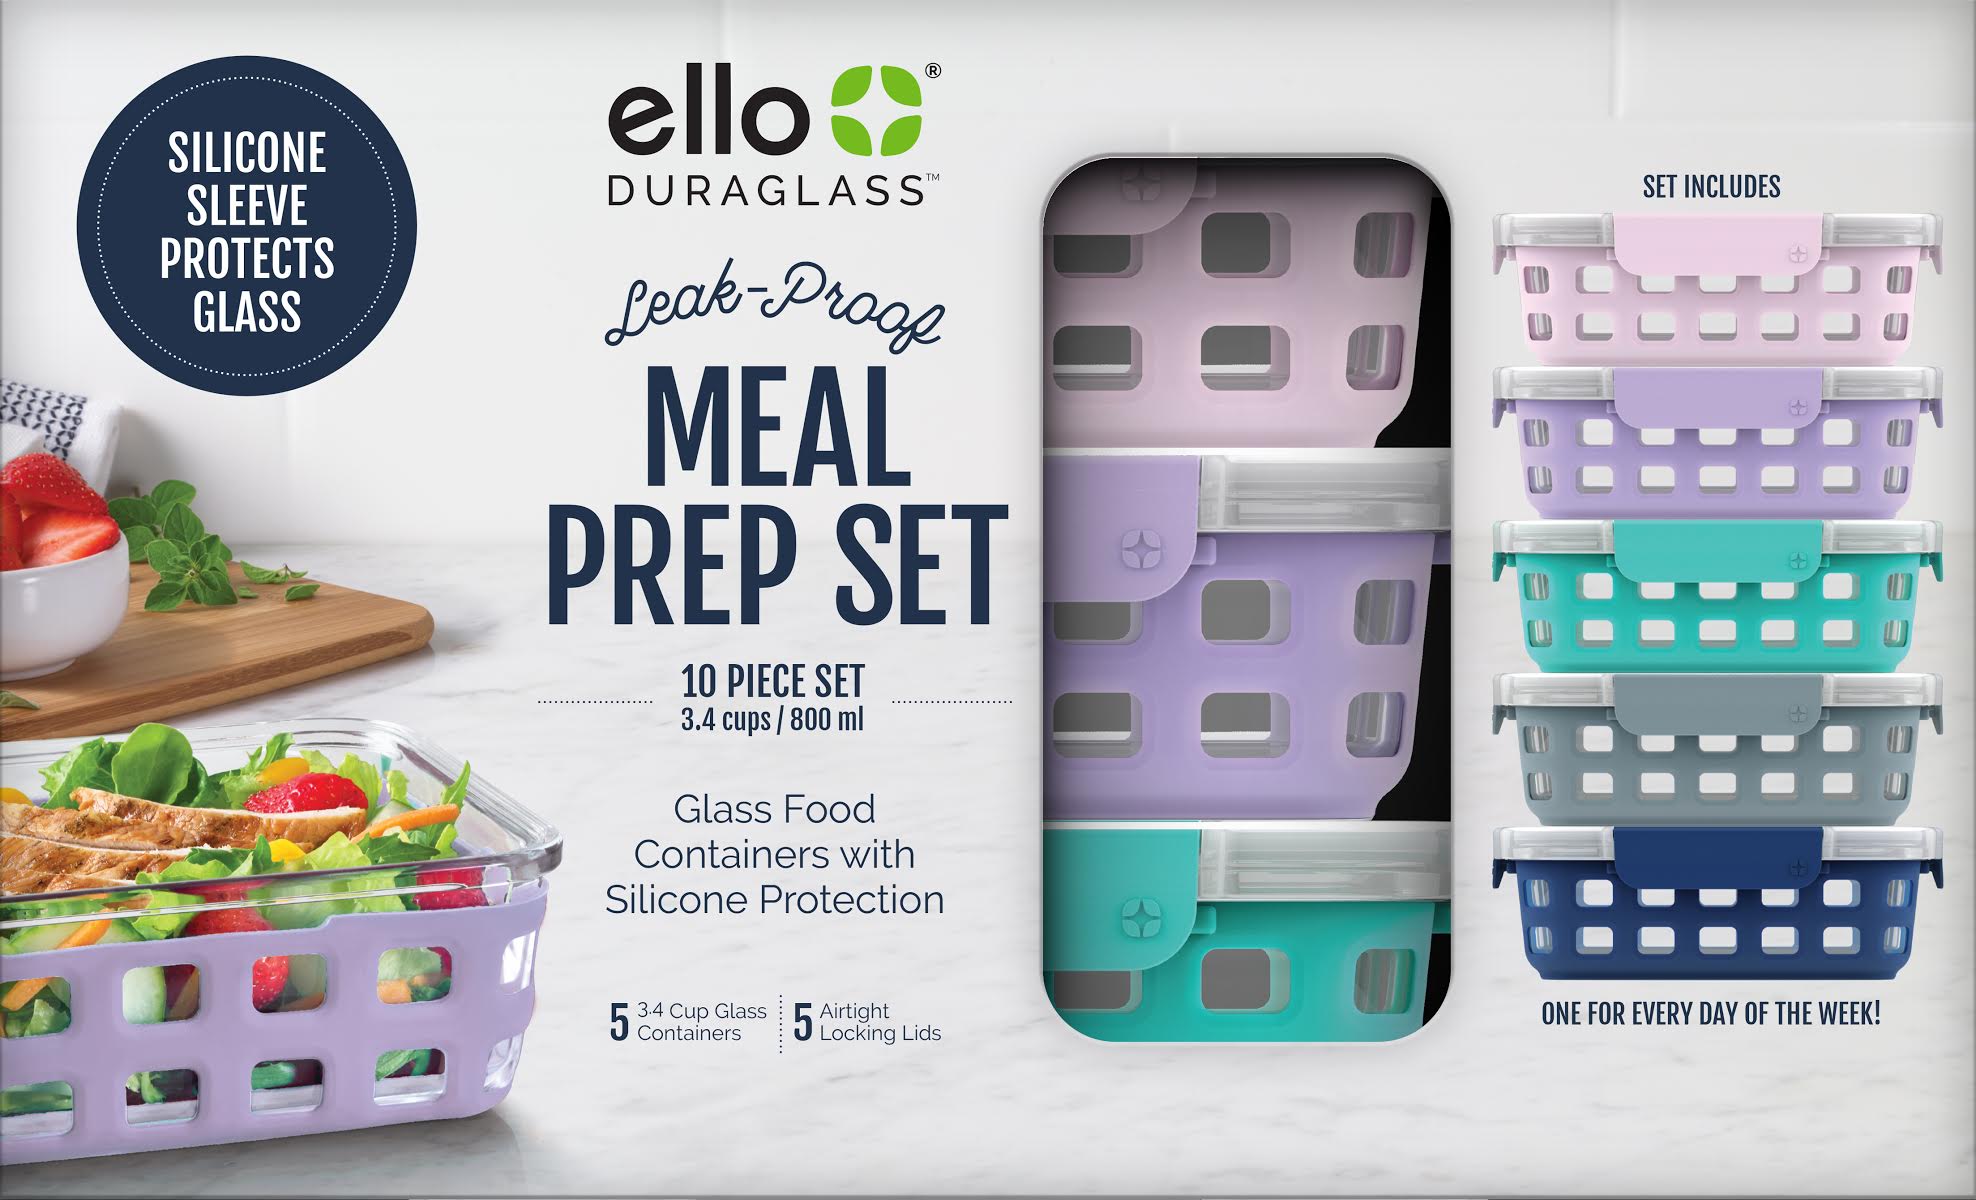 Ello DuraGlass 6-pc. Meal Prep Set